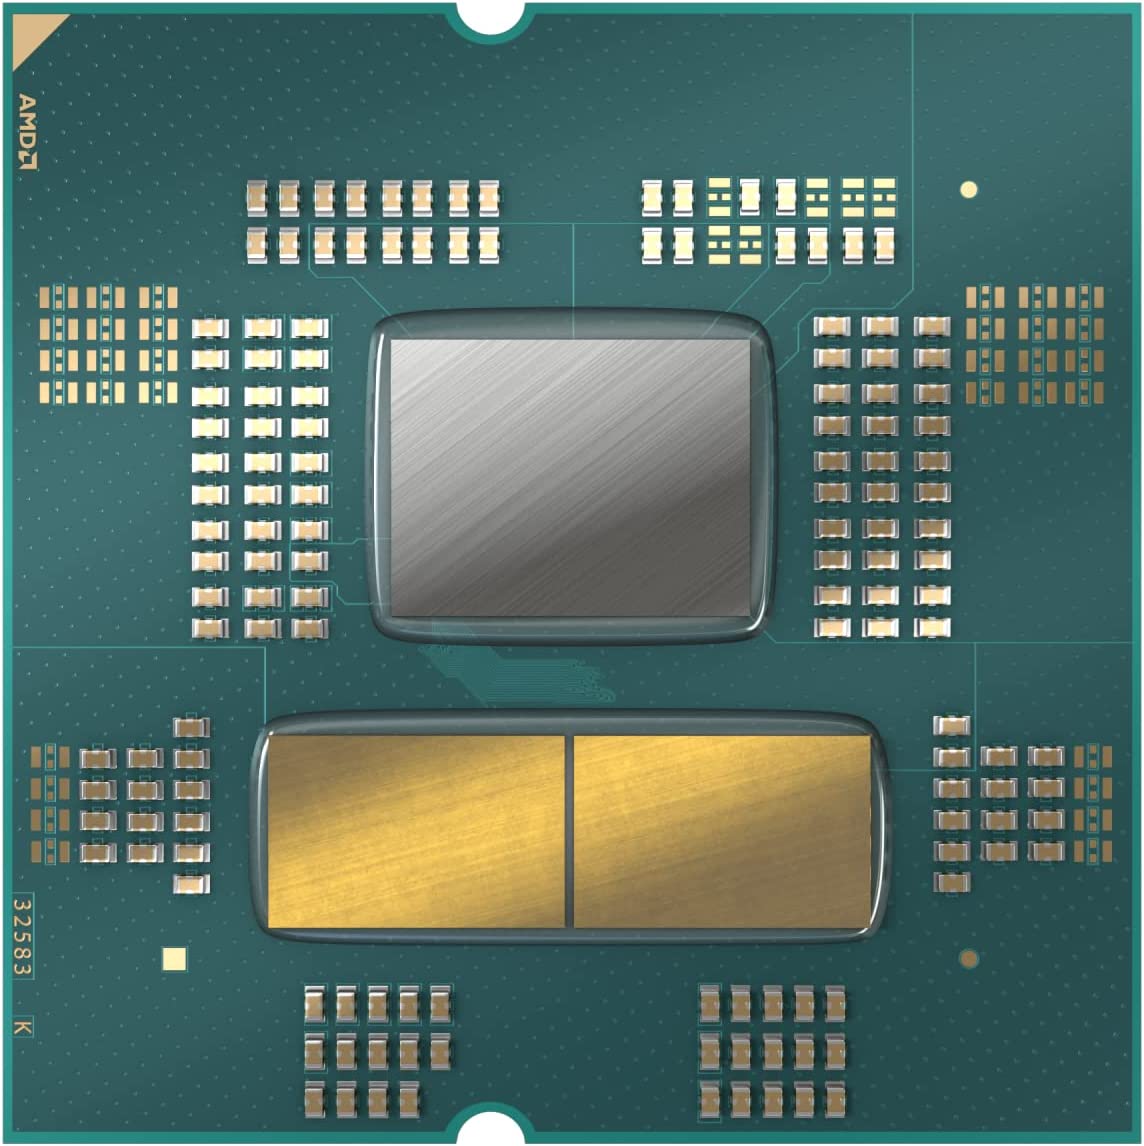 TechPowerUp] AMD Ryzen 7 7800X3D Review - The Best Gaming CPU : r/hardware